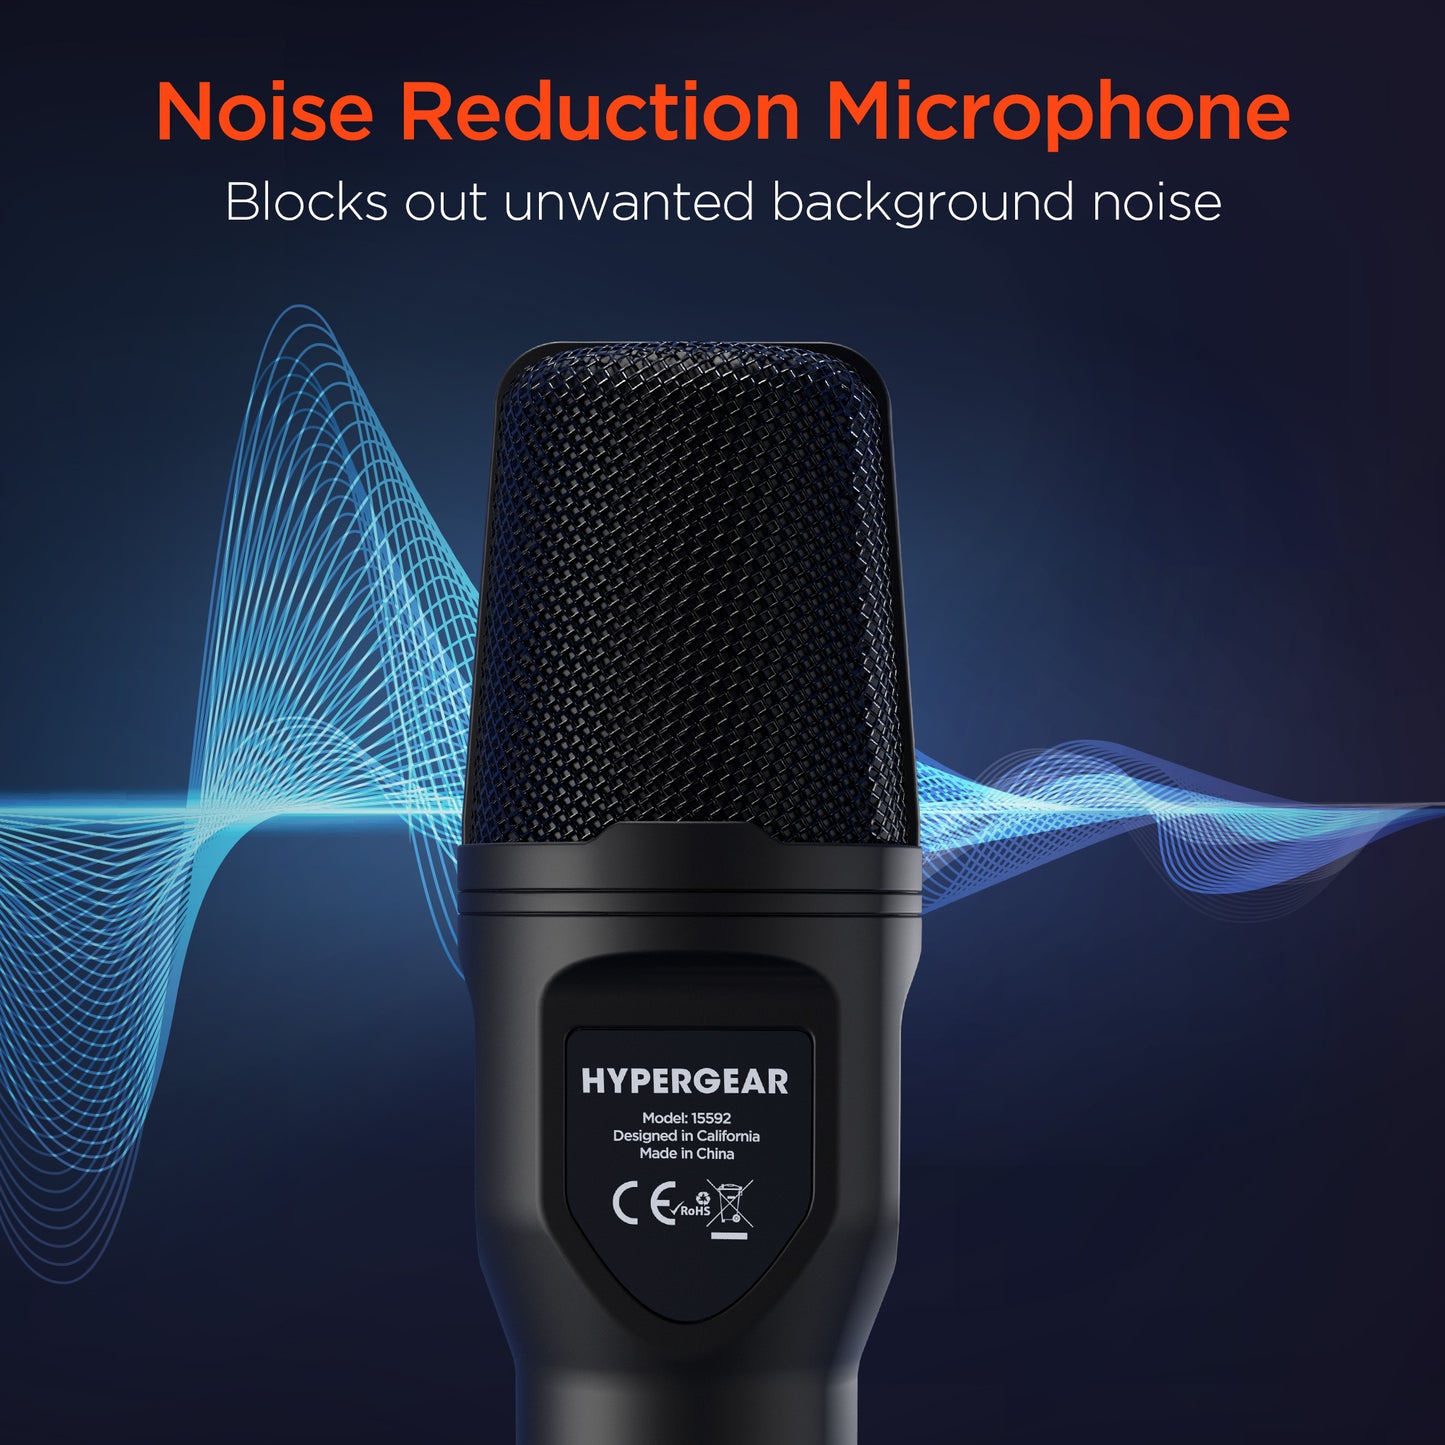 Sound Advantage Pro-Audio Condenser Microphone